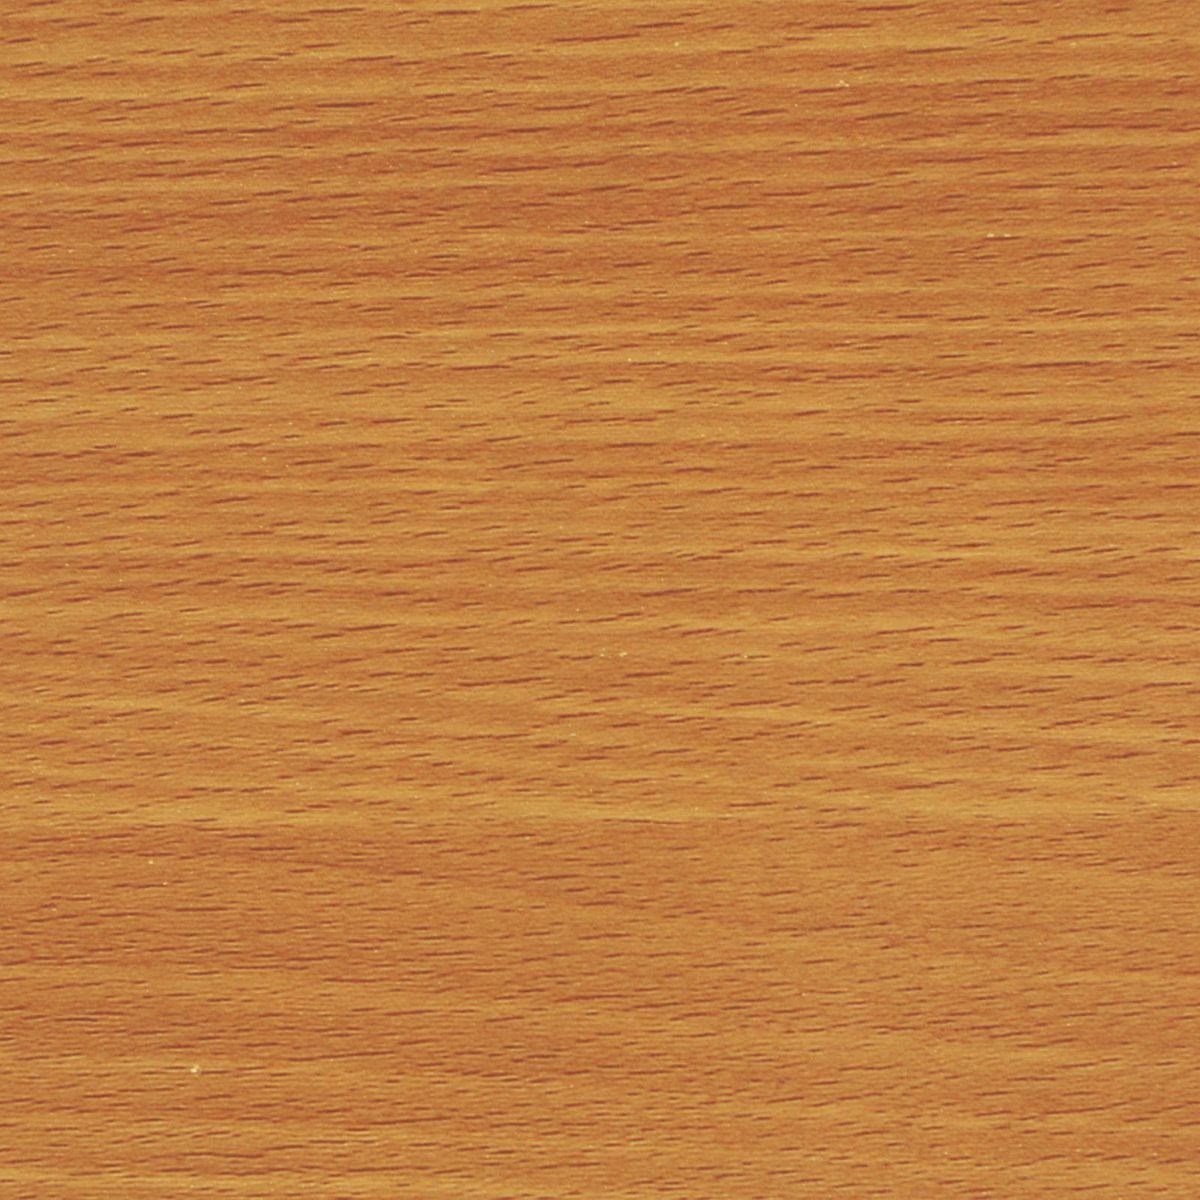 Selbstklebende Deko Folie - Matt - Weiß - 0,9 x 4 m Rolle – Zadawerk